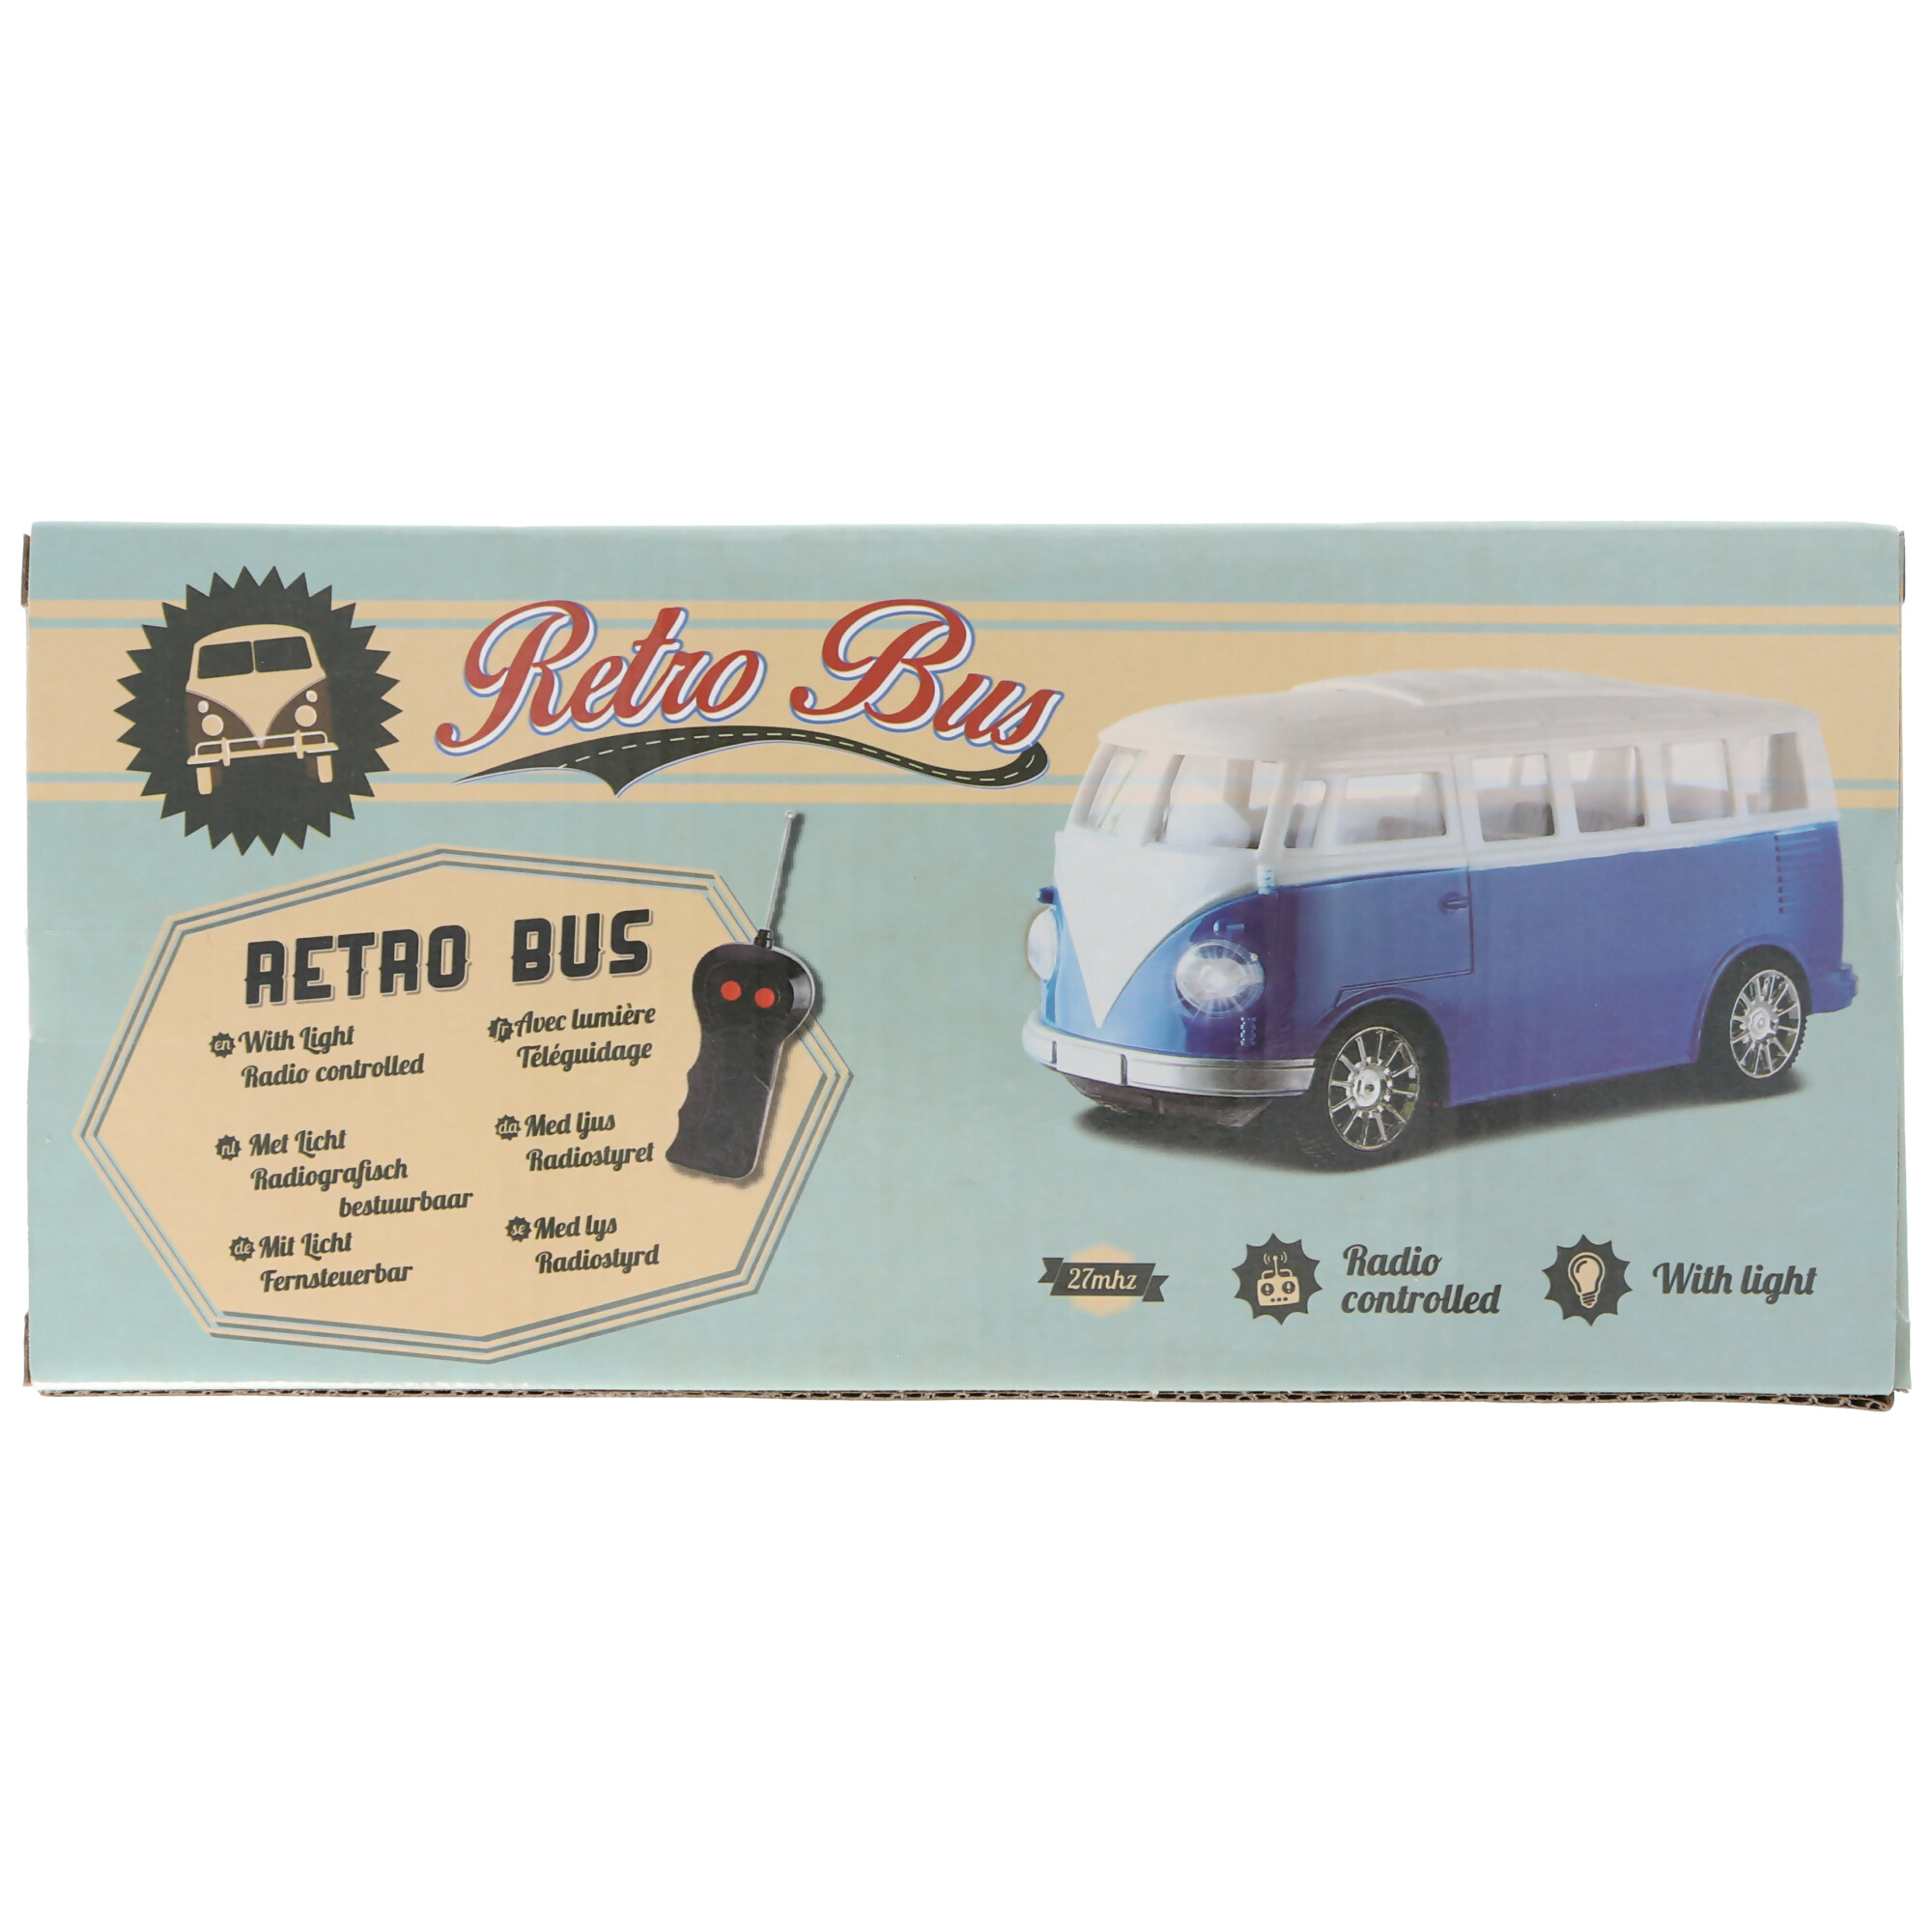 Retro Bus Bulli RC-Model im Maßstab 1:24 Farbe blau inklusive 5 AA Mignon Batterien